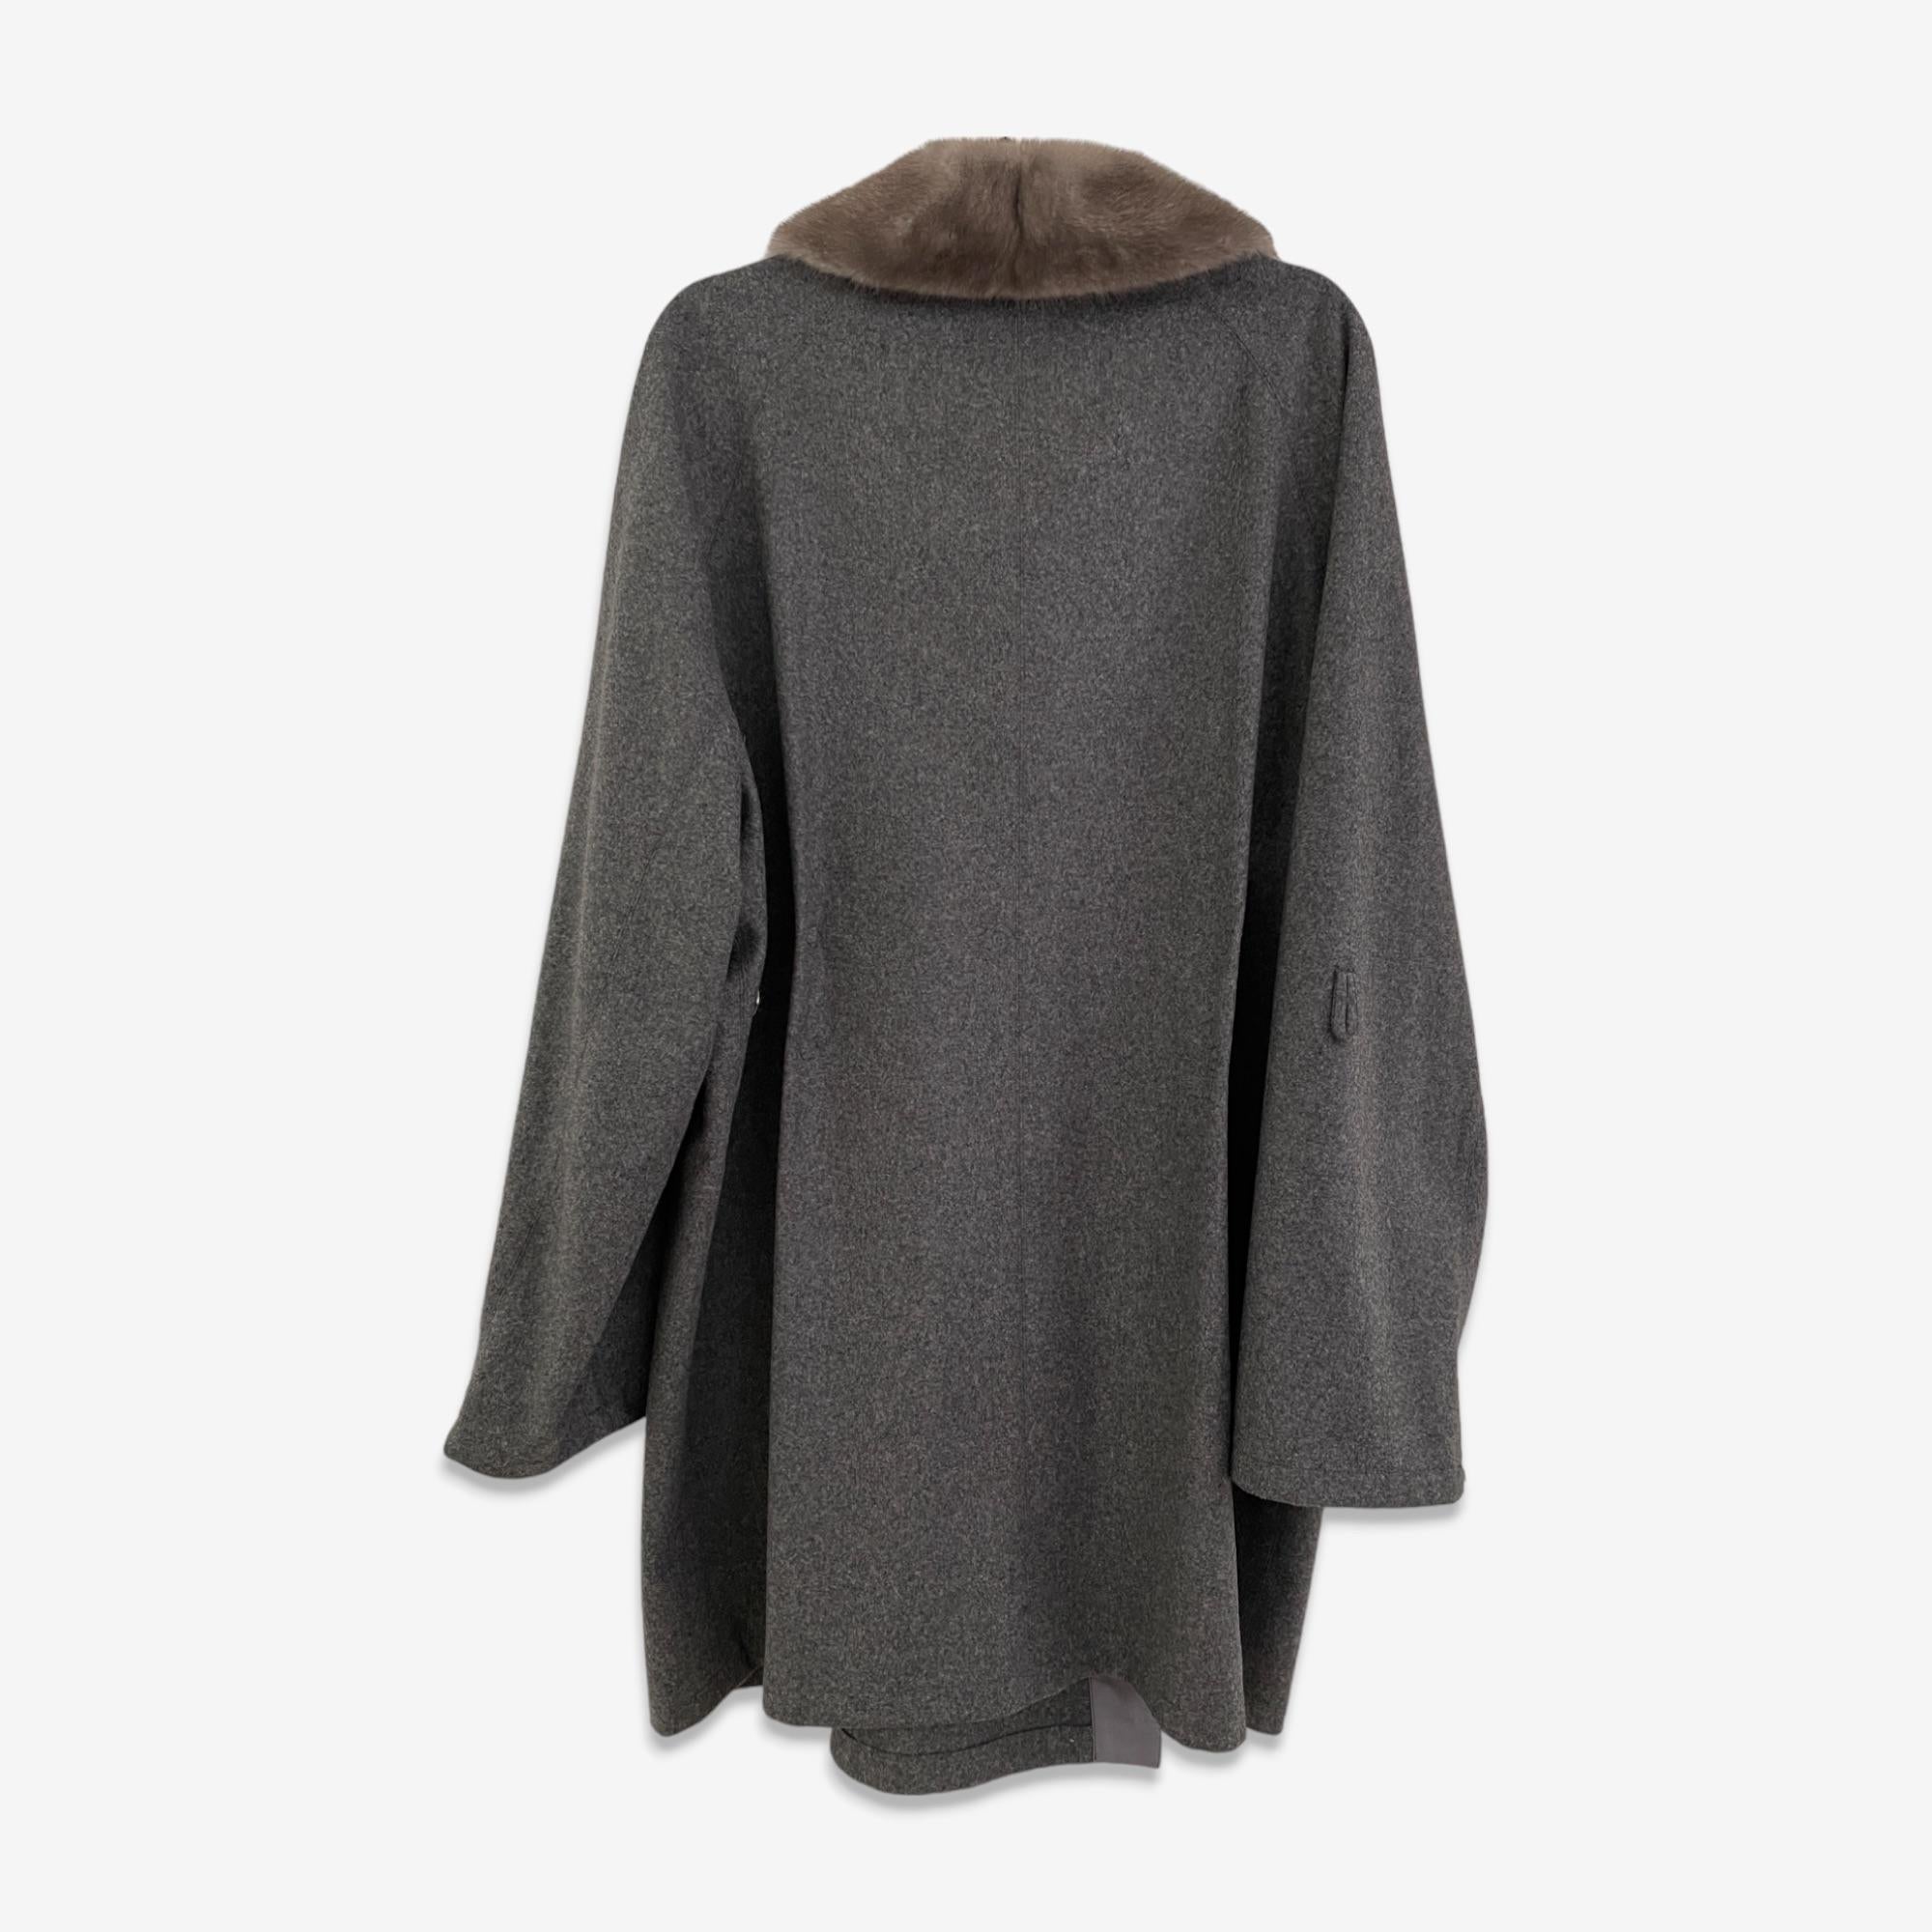 Super Miu Miu Coat with fur
2000s
Size: 42 IT
Materials: 75% Virgine Wool - 20% Nylon 5% Cashmire
+ Fur
Measures: Shoulders 42cm Length 90cm
